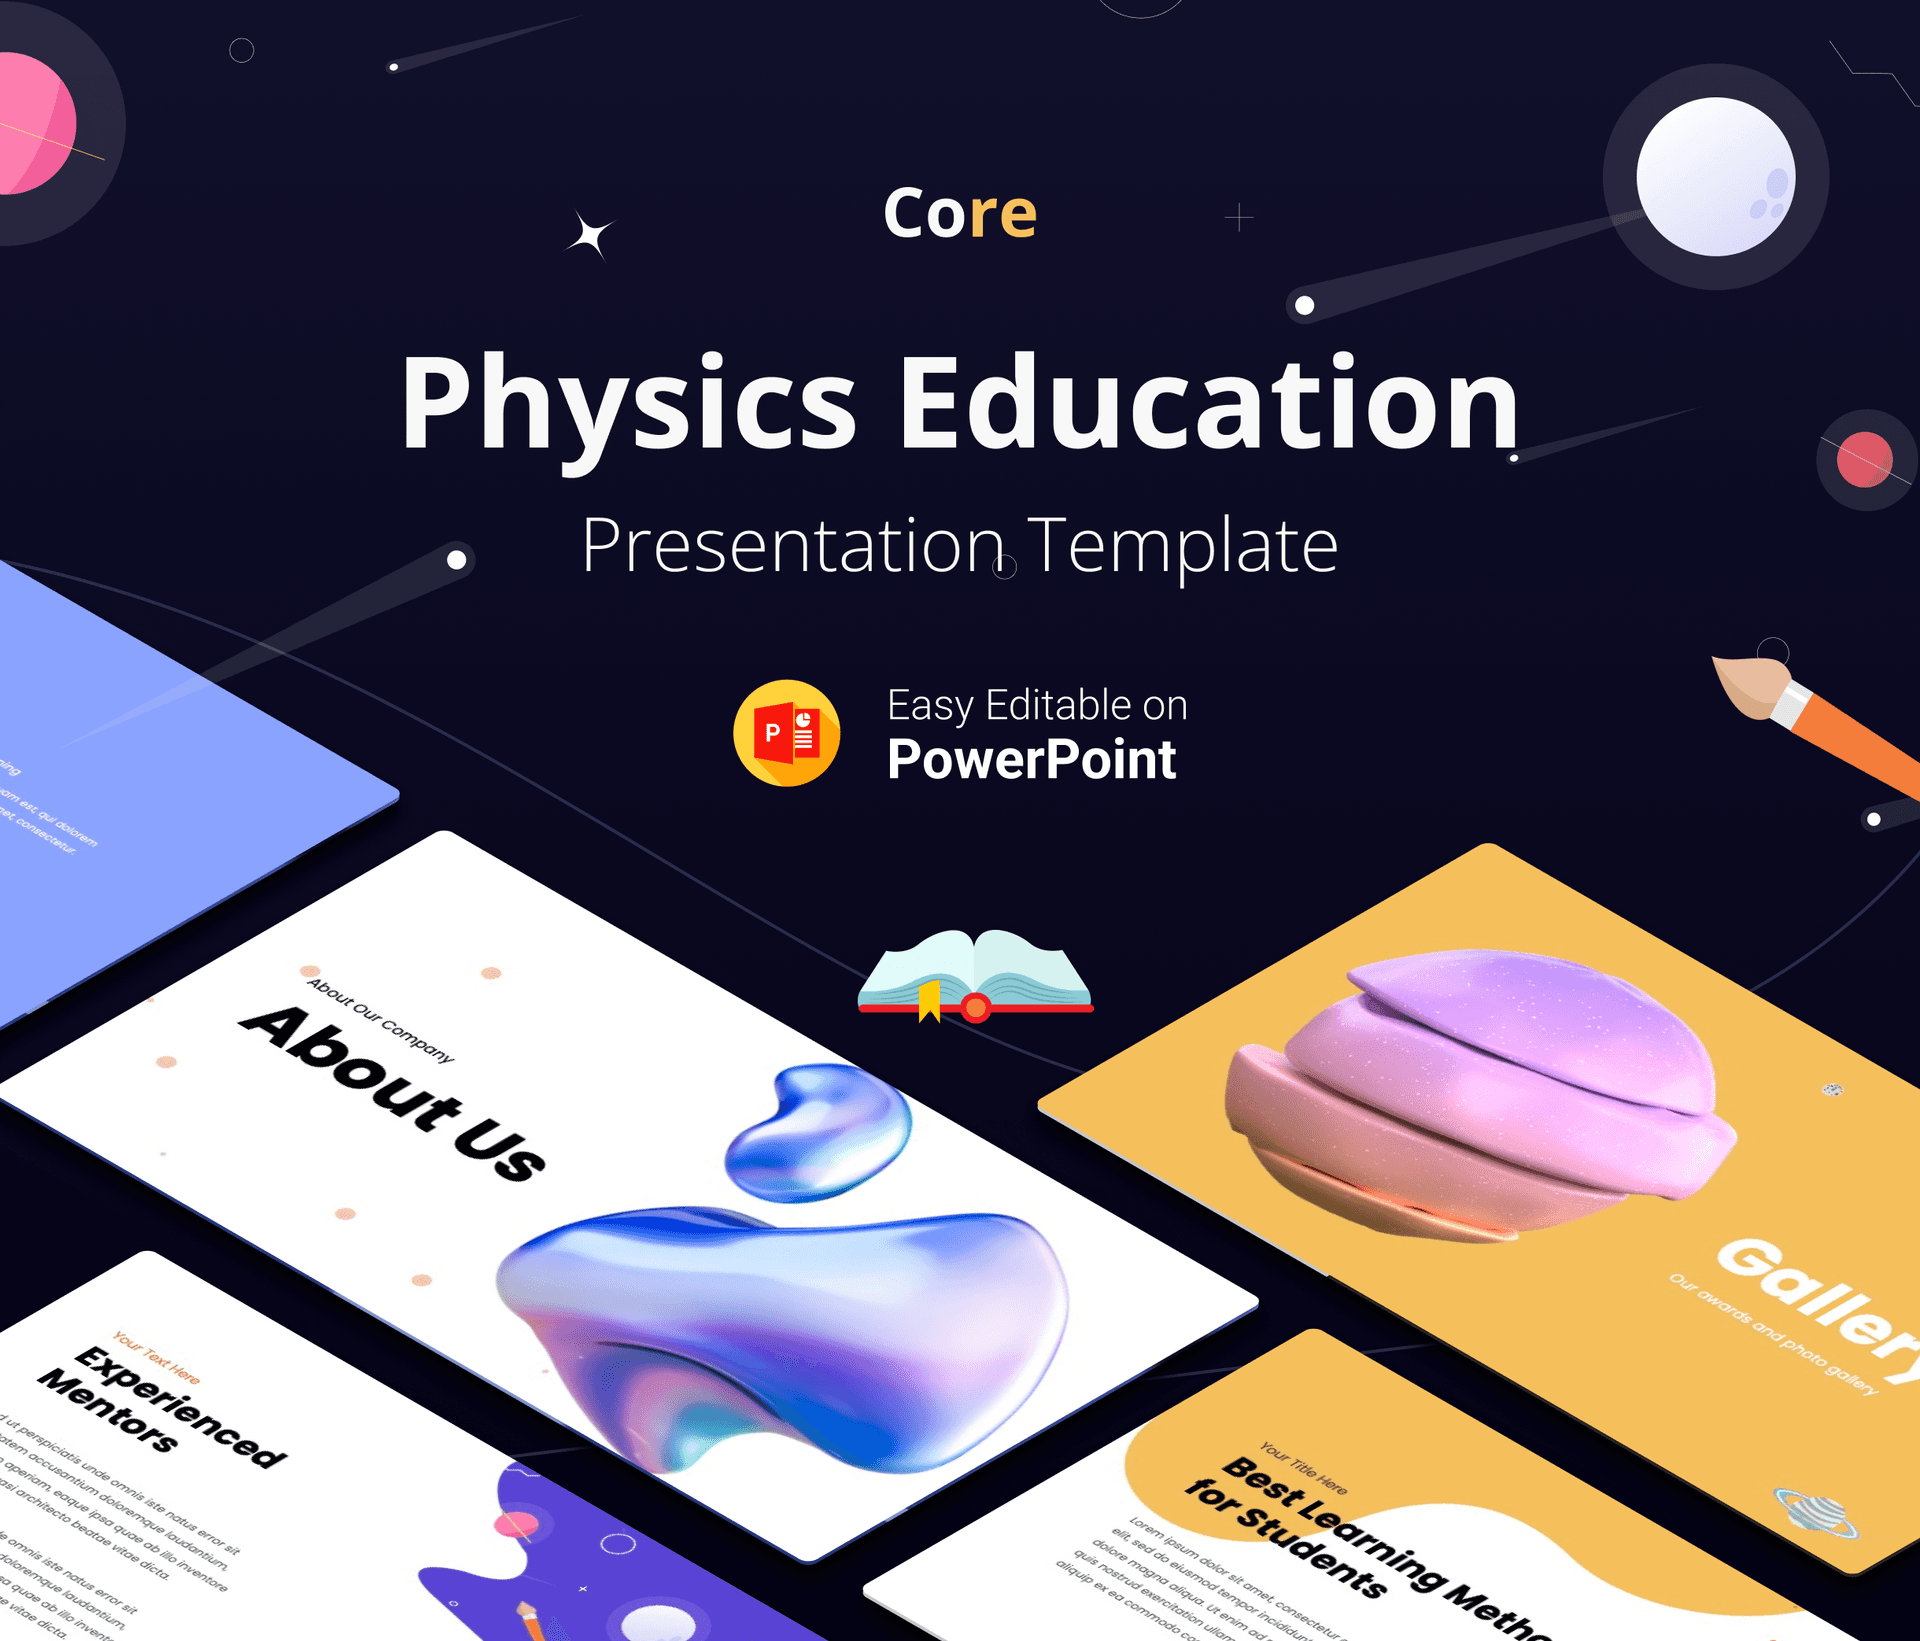 Core - Physics Education Template